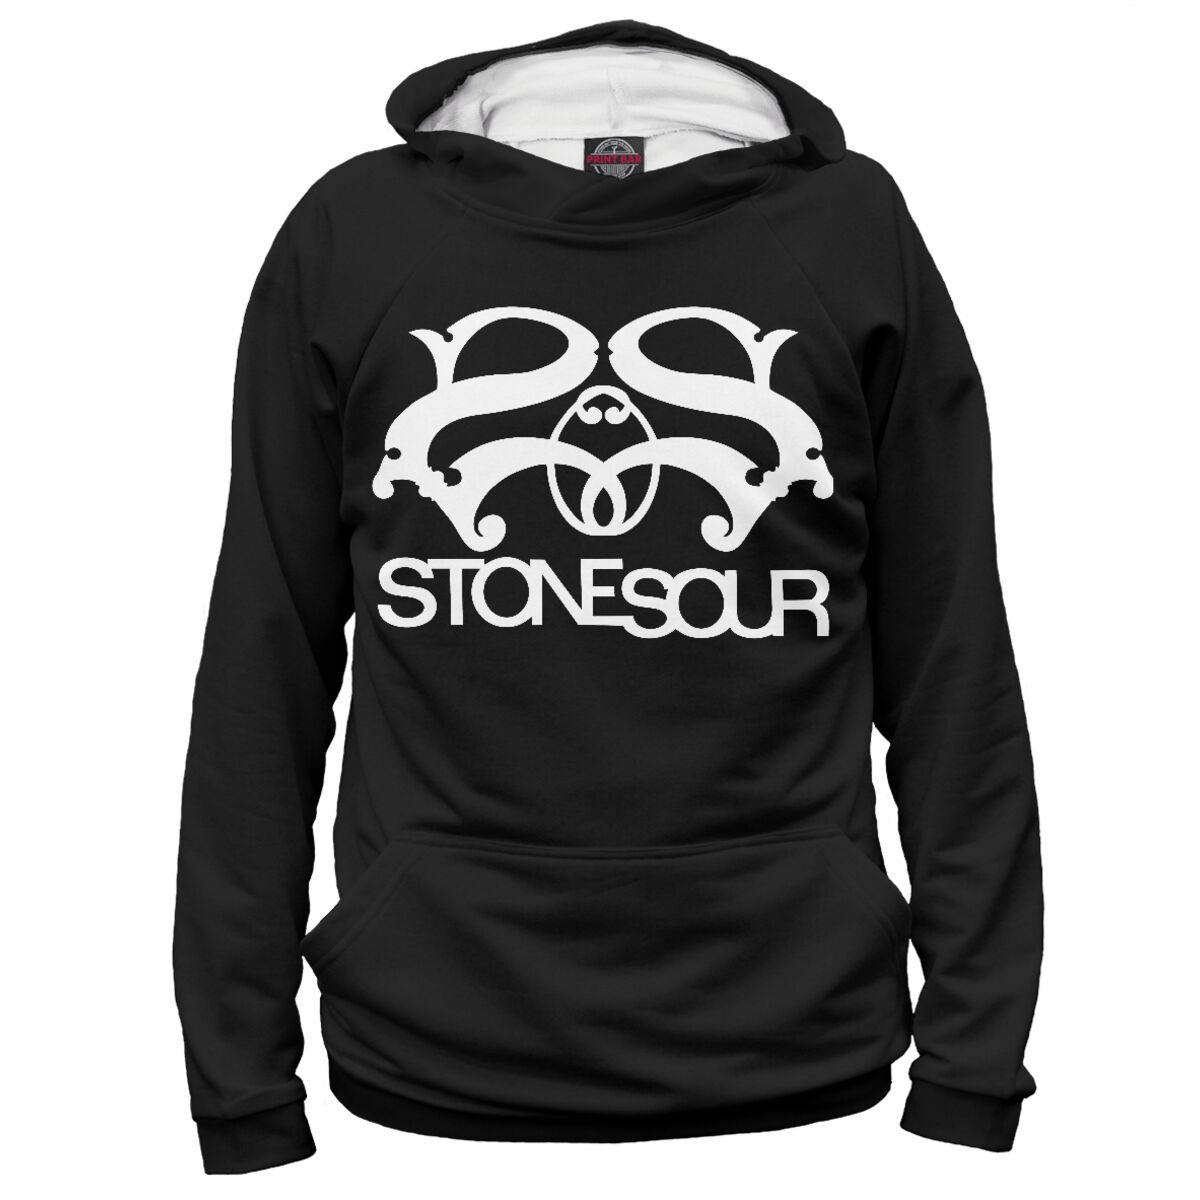 Never stone. Stone Sour логотип. Худи с лого. Худи логотип арт. Худи логотип на подарок парню.